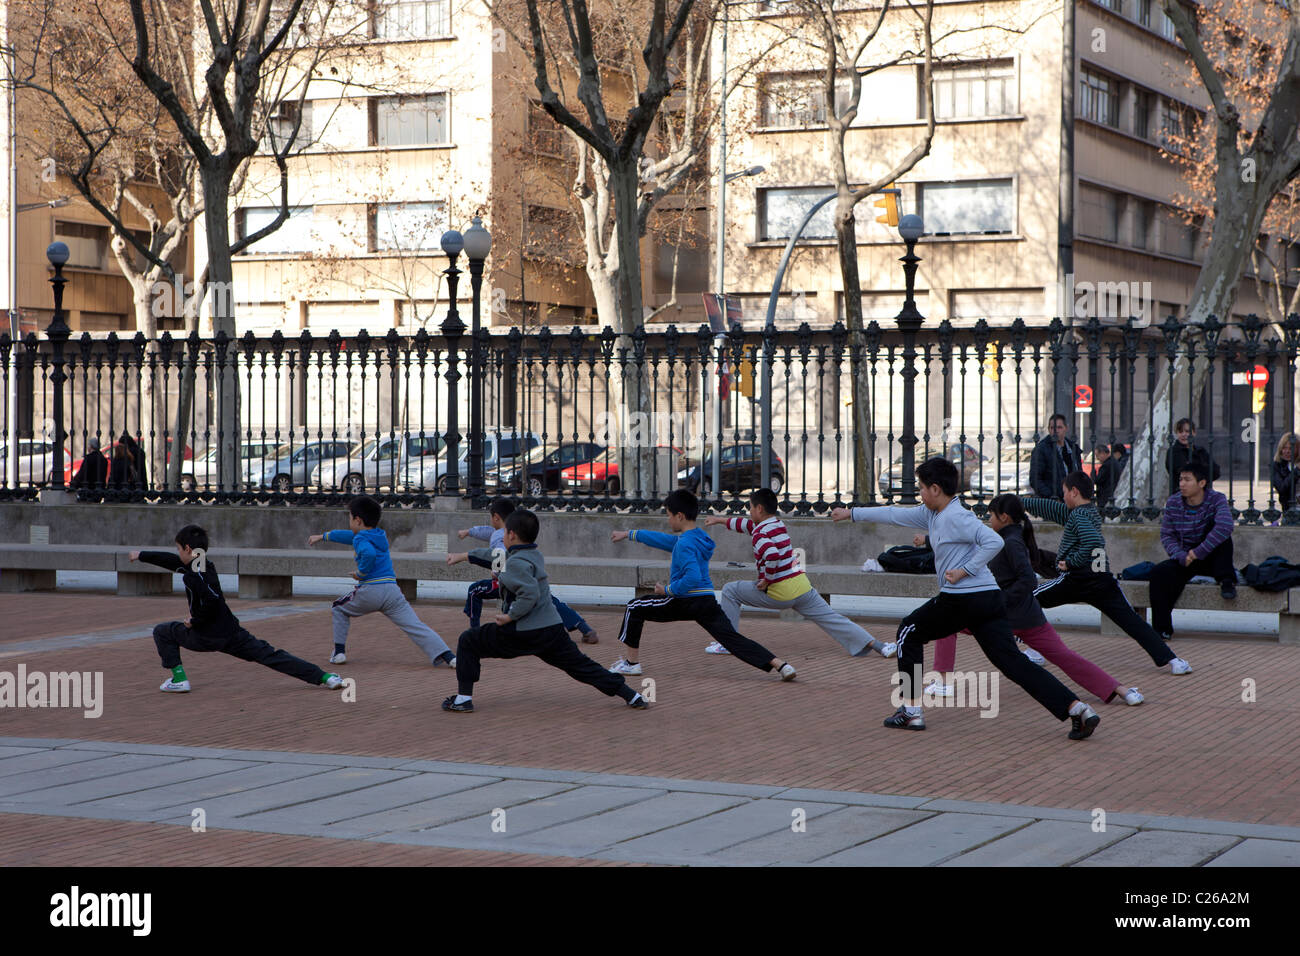 Martial arts coaching in Ciudadela or Ciutatdella park, Barcelona, Spain Stock Photo